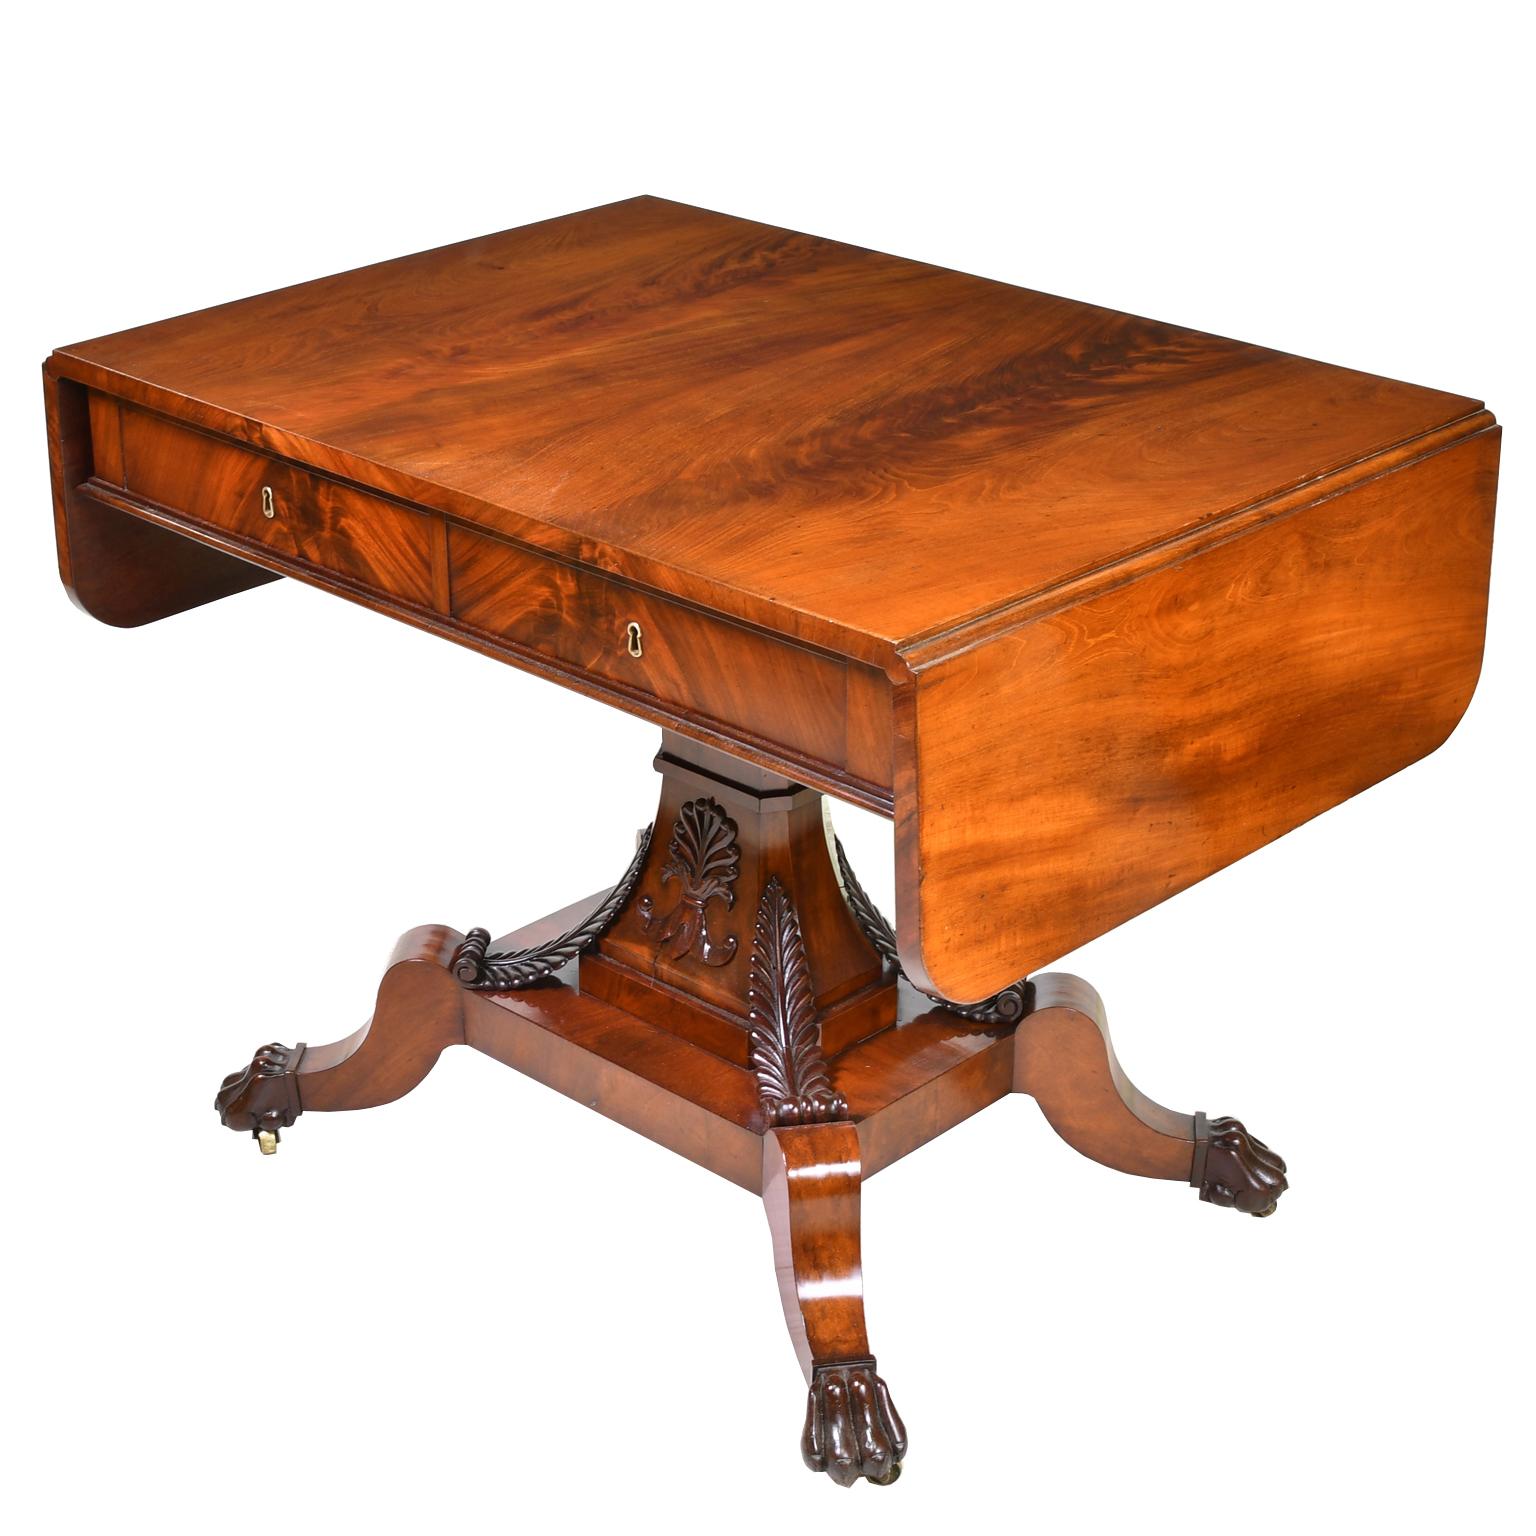  Swedish Karl Johan Salon/Sofa Table or Desk in West Indies Mahogany, c. 1825 For Sale 3